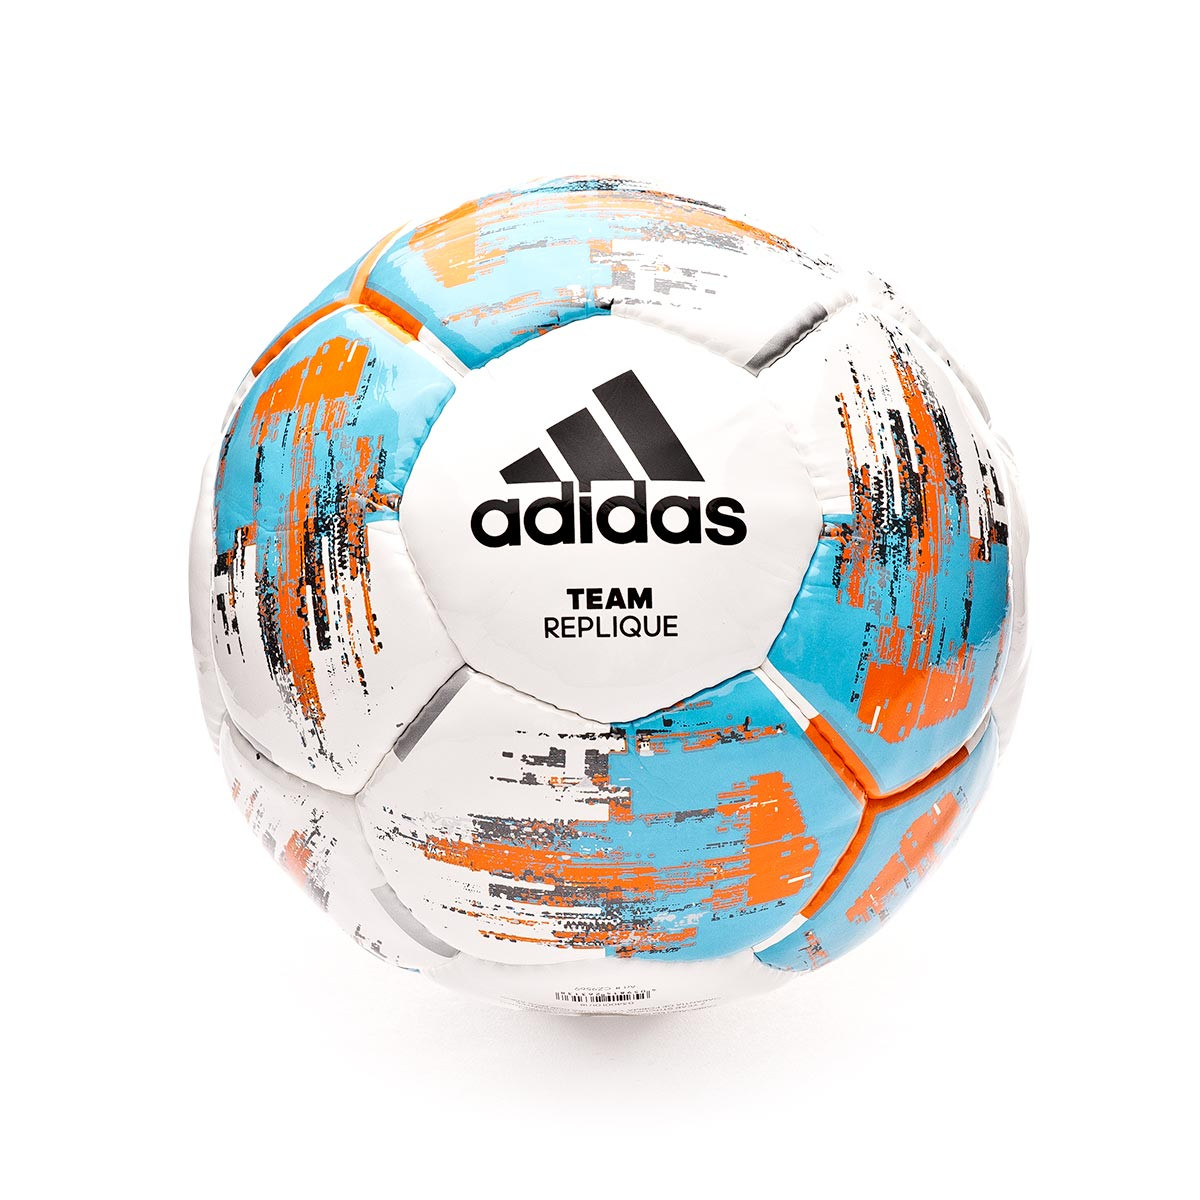 adidas team soccer catalog 2019